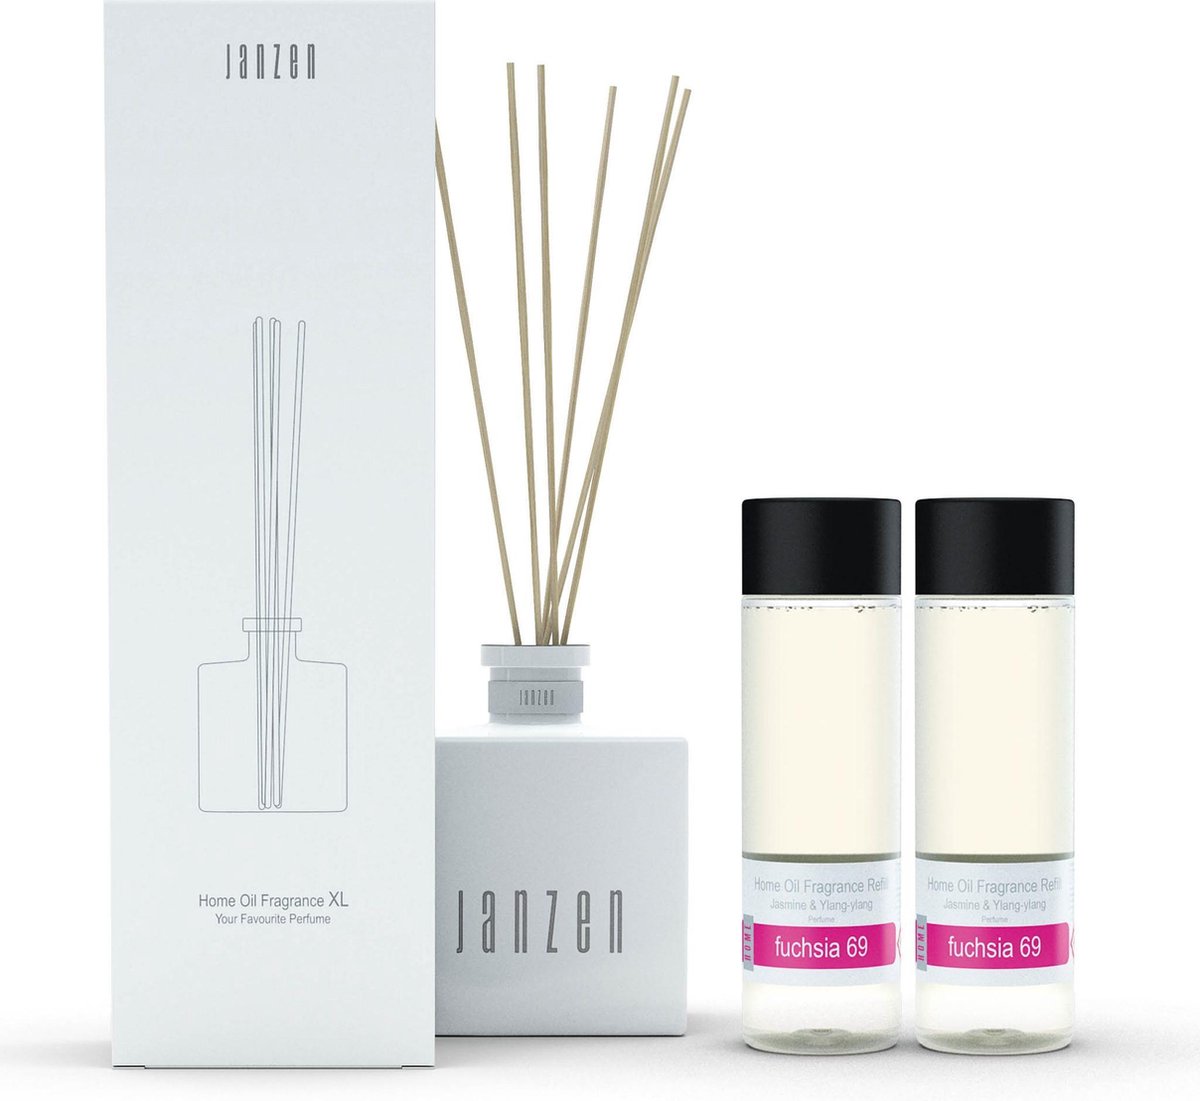 Janzen Home Fragrance Sticks XL wit inclusief Fuchsia 69